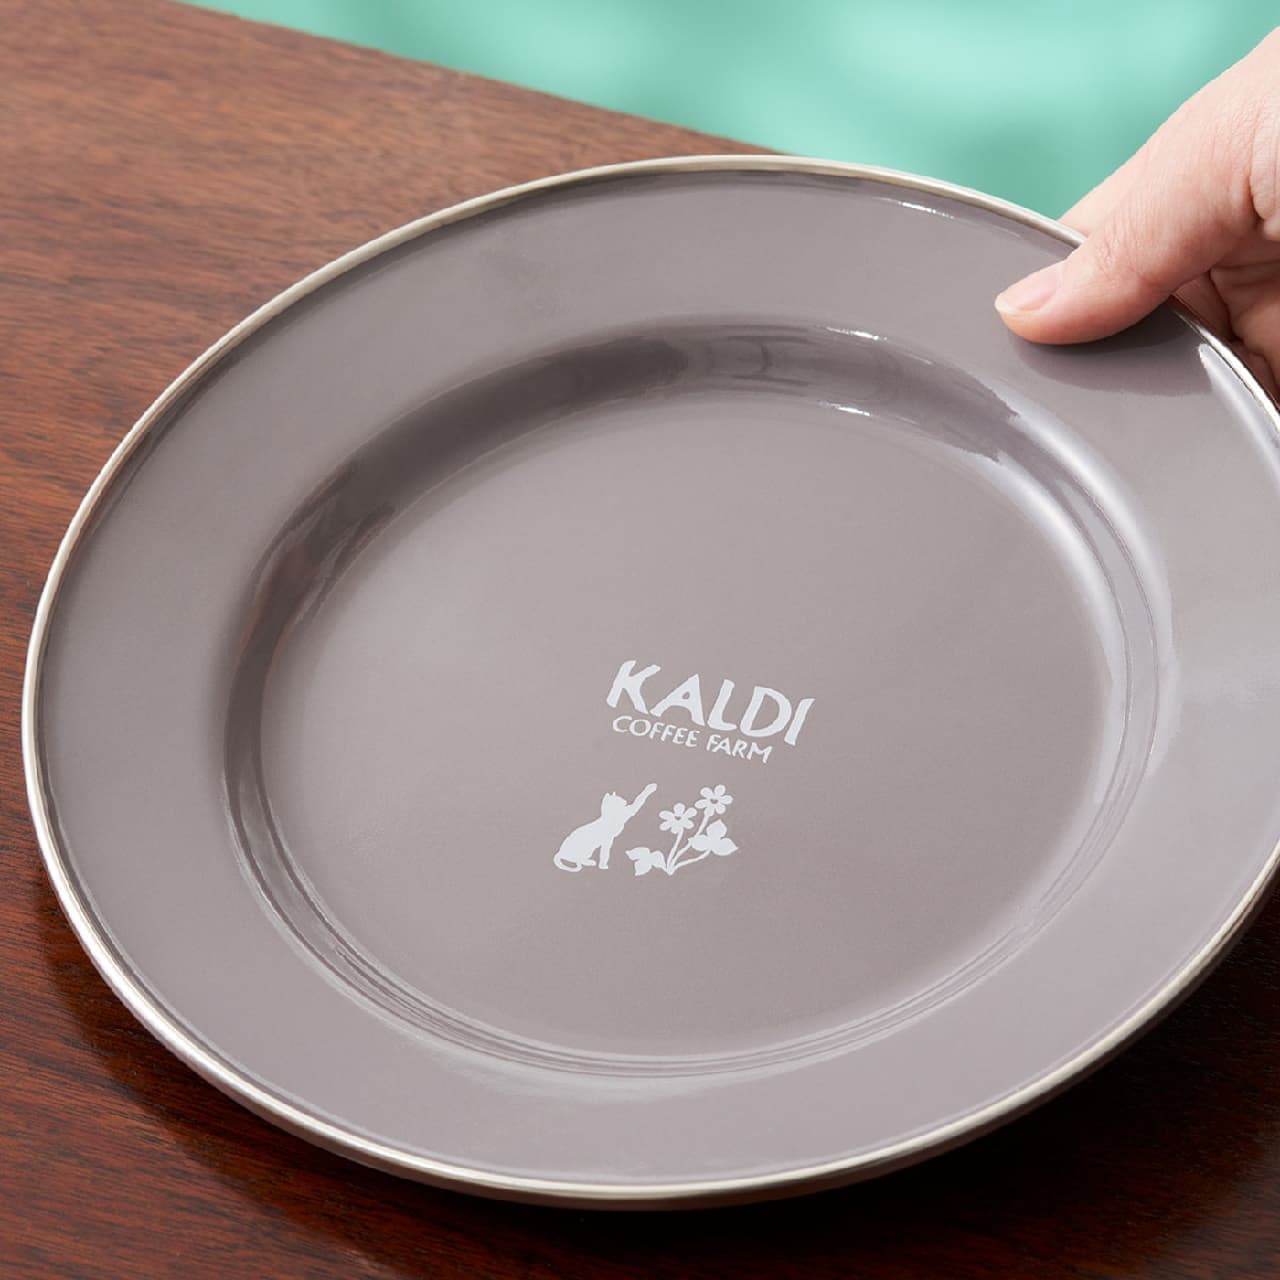 KALDI "Enameled plate